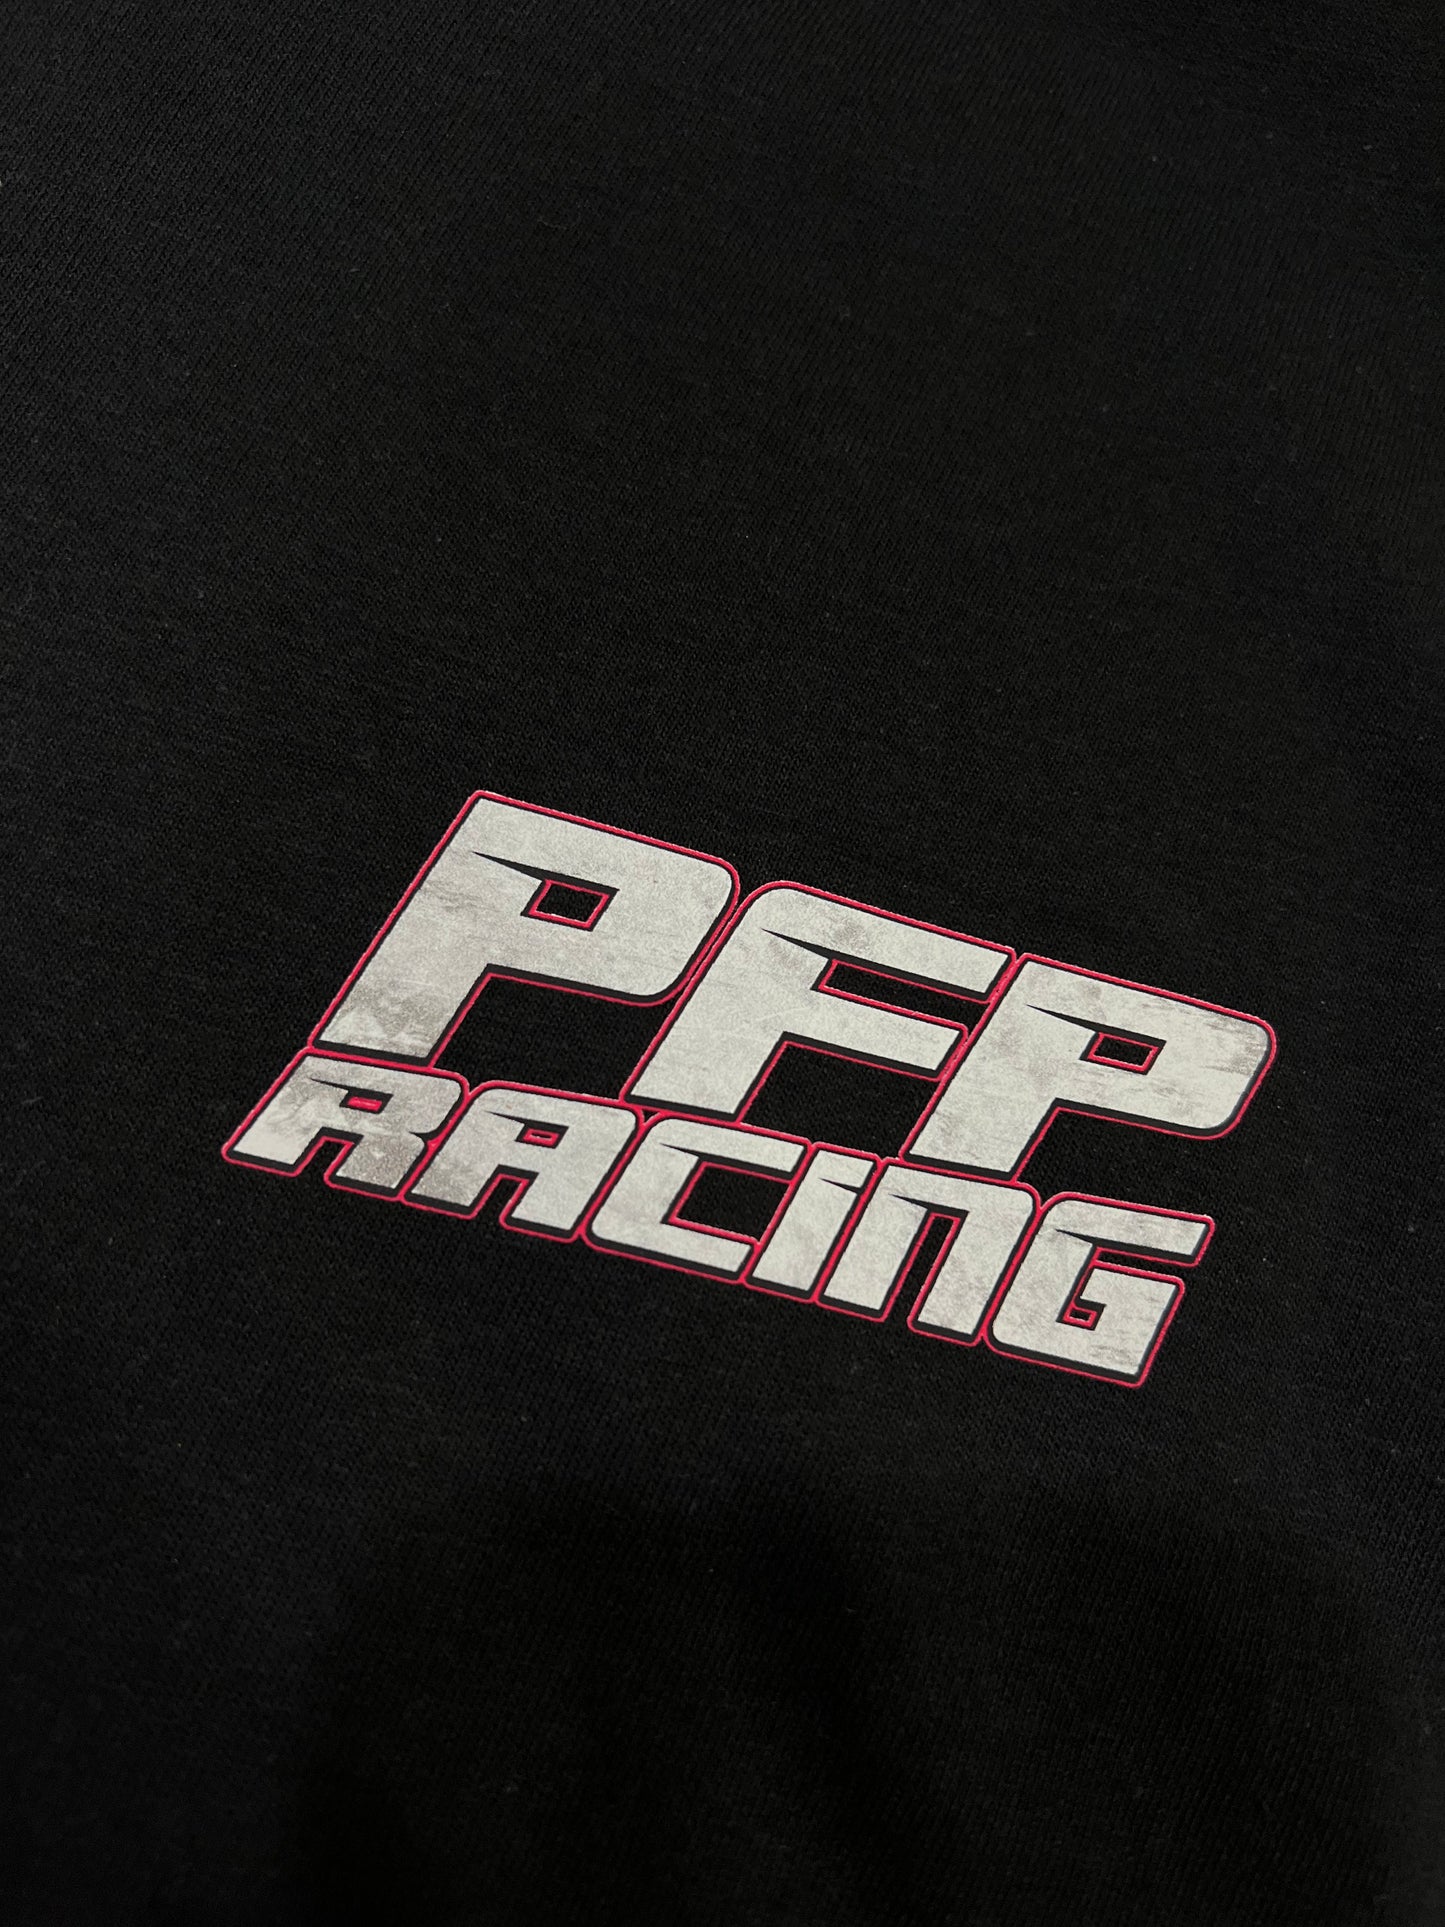 Presley Racing Tshirt